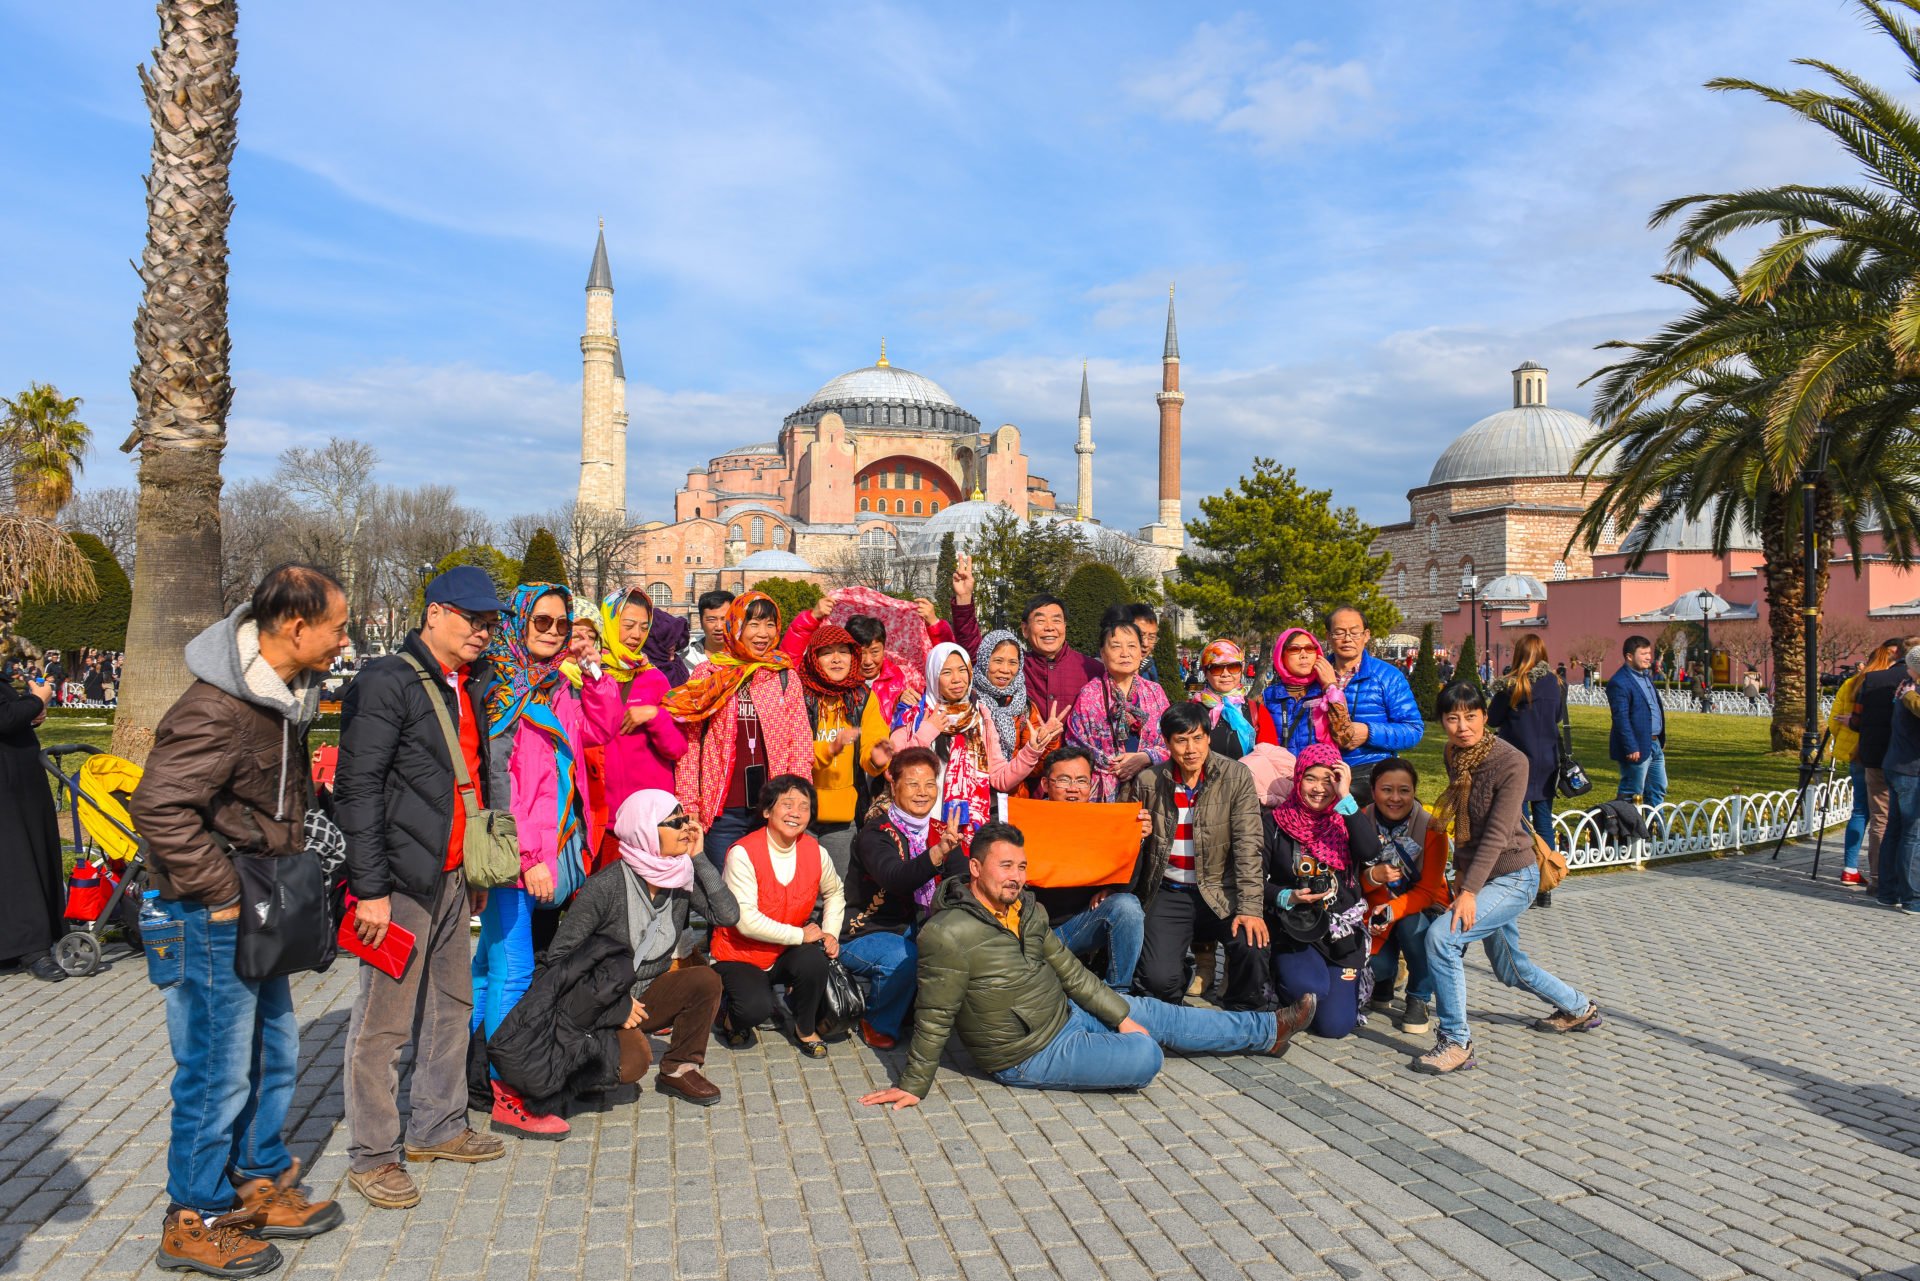 Праздники в стамбуле. Стамбул туристы. Турция туризм. Стамбул фото туристов. Стамбул для туристов экскурсии.